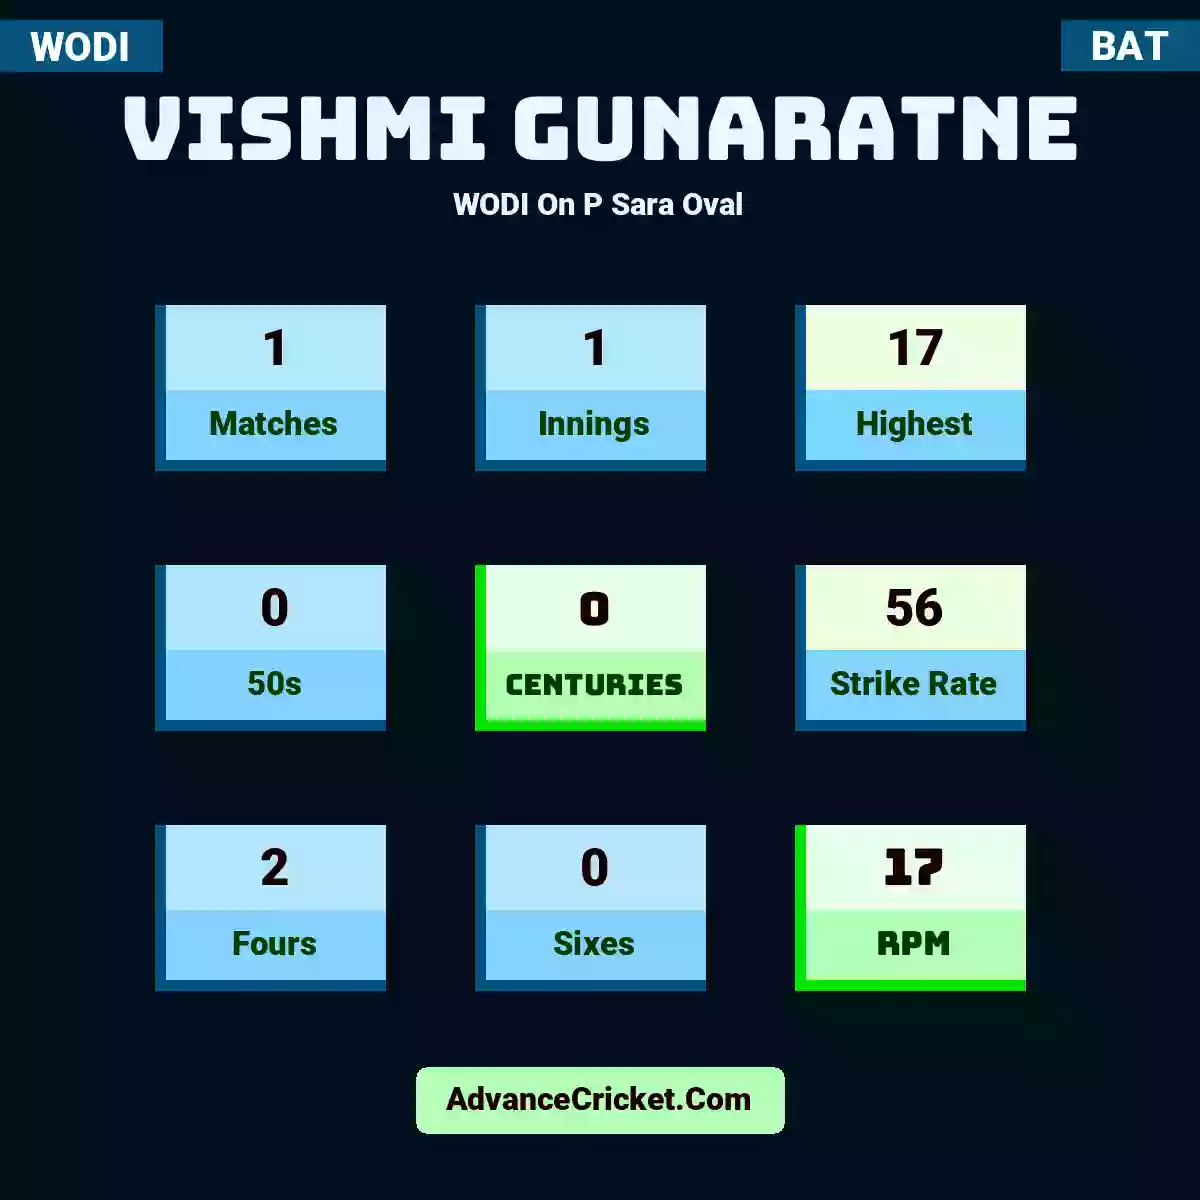 Vishmi Gunaratne WODI  On P Sara Oval, Vishmi Gunaratne played 1 matches, scored 17 runs as highest, 0 half-centuries, and 0 centuries, with a strike rate of 56. V.Gunaratne hit 2 fours and 0 sixes, with an RPM of 17.